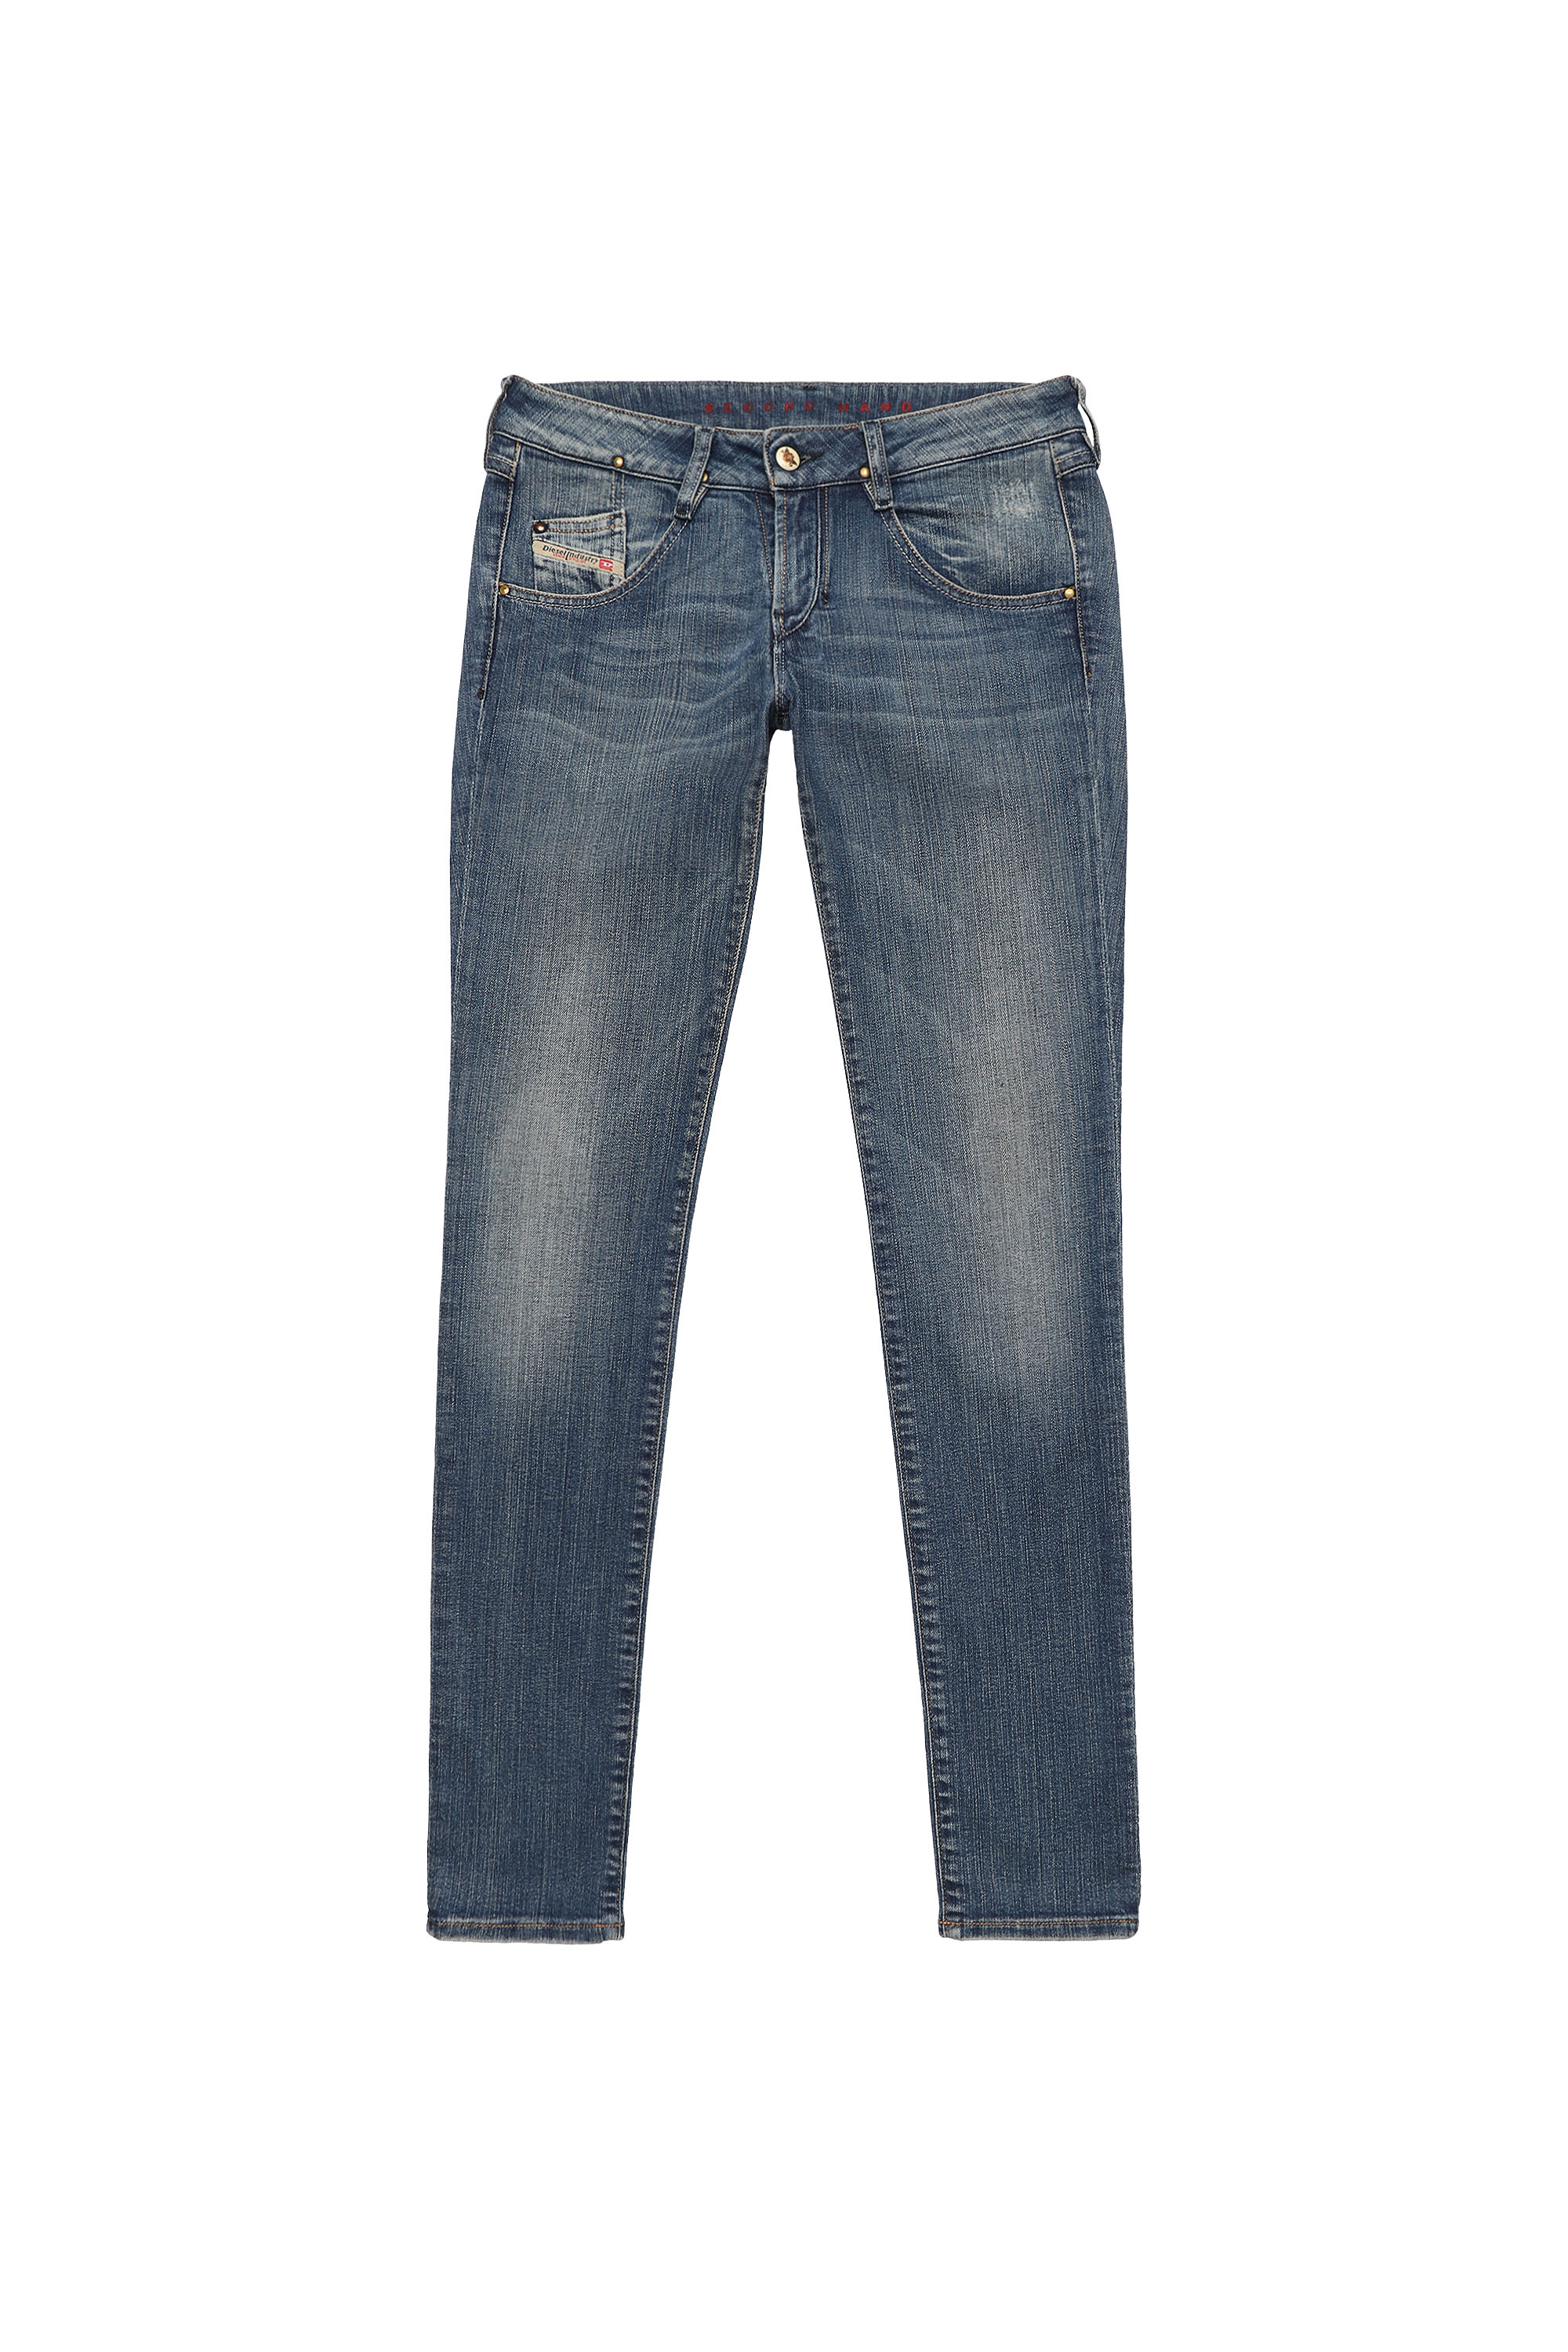 CLUSH, Medium blue - Jeans